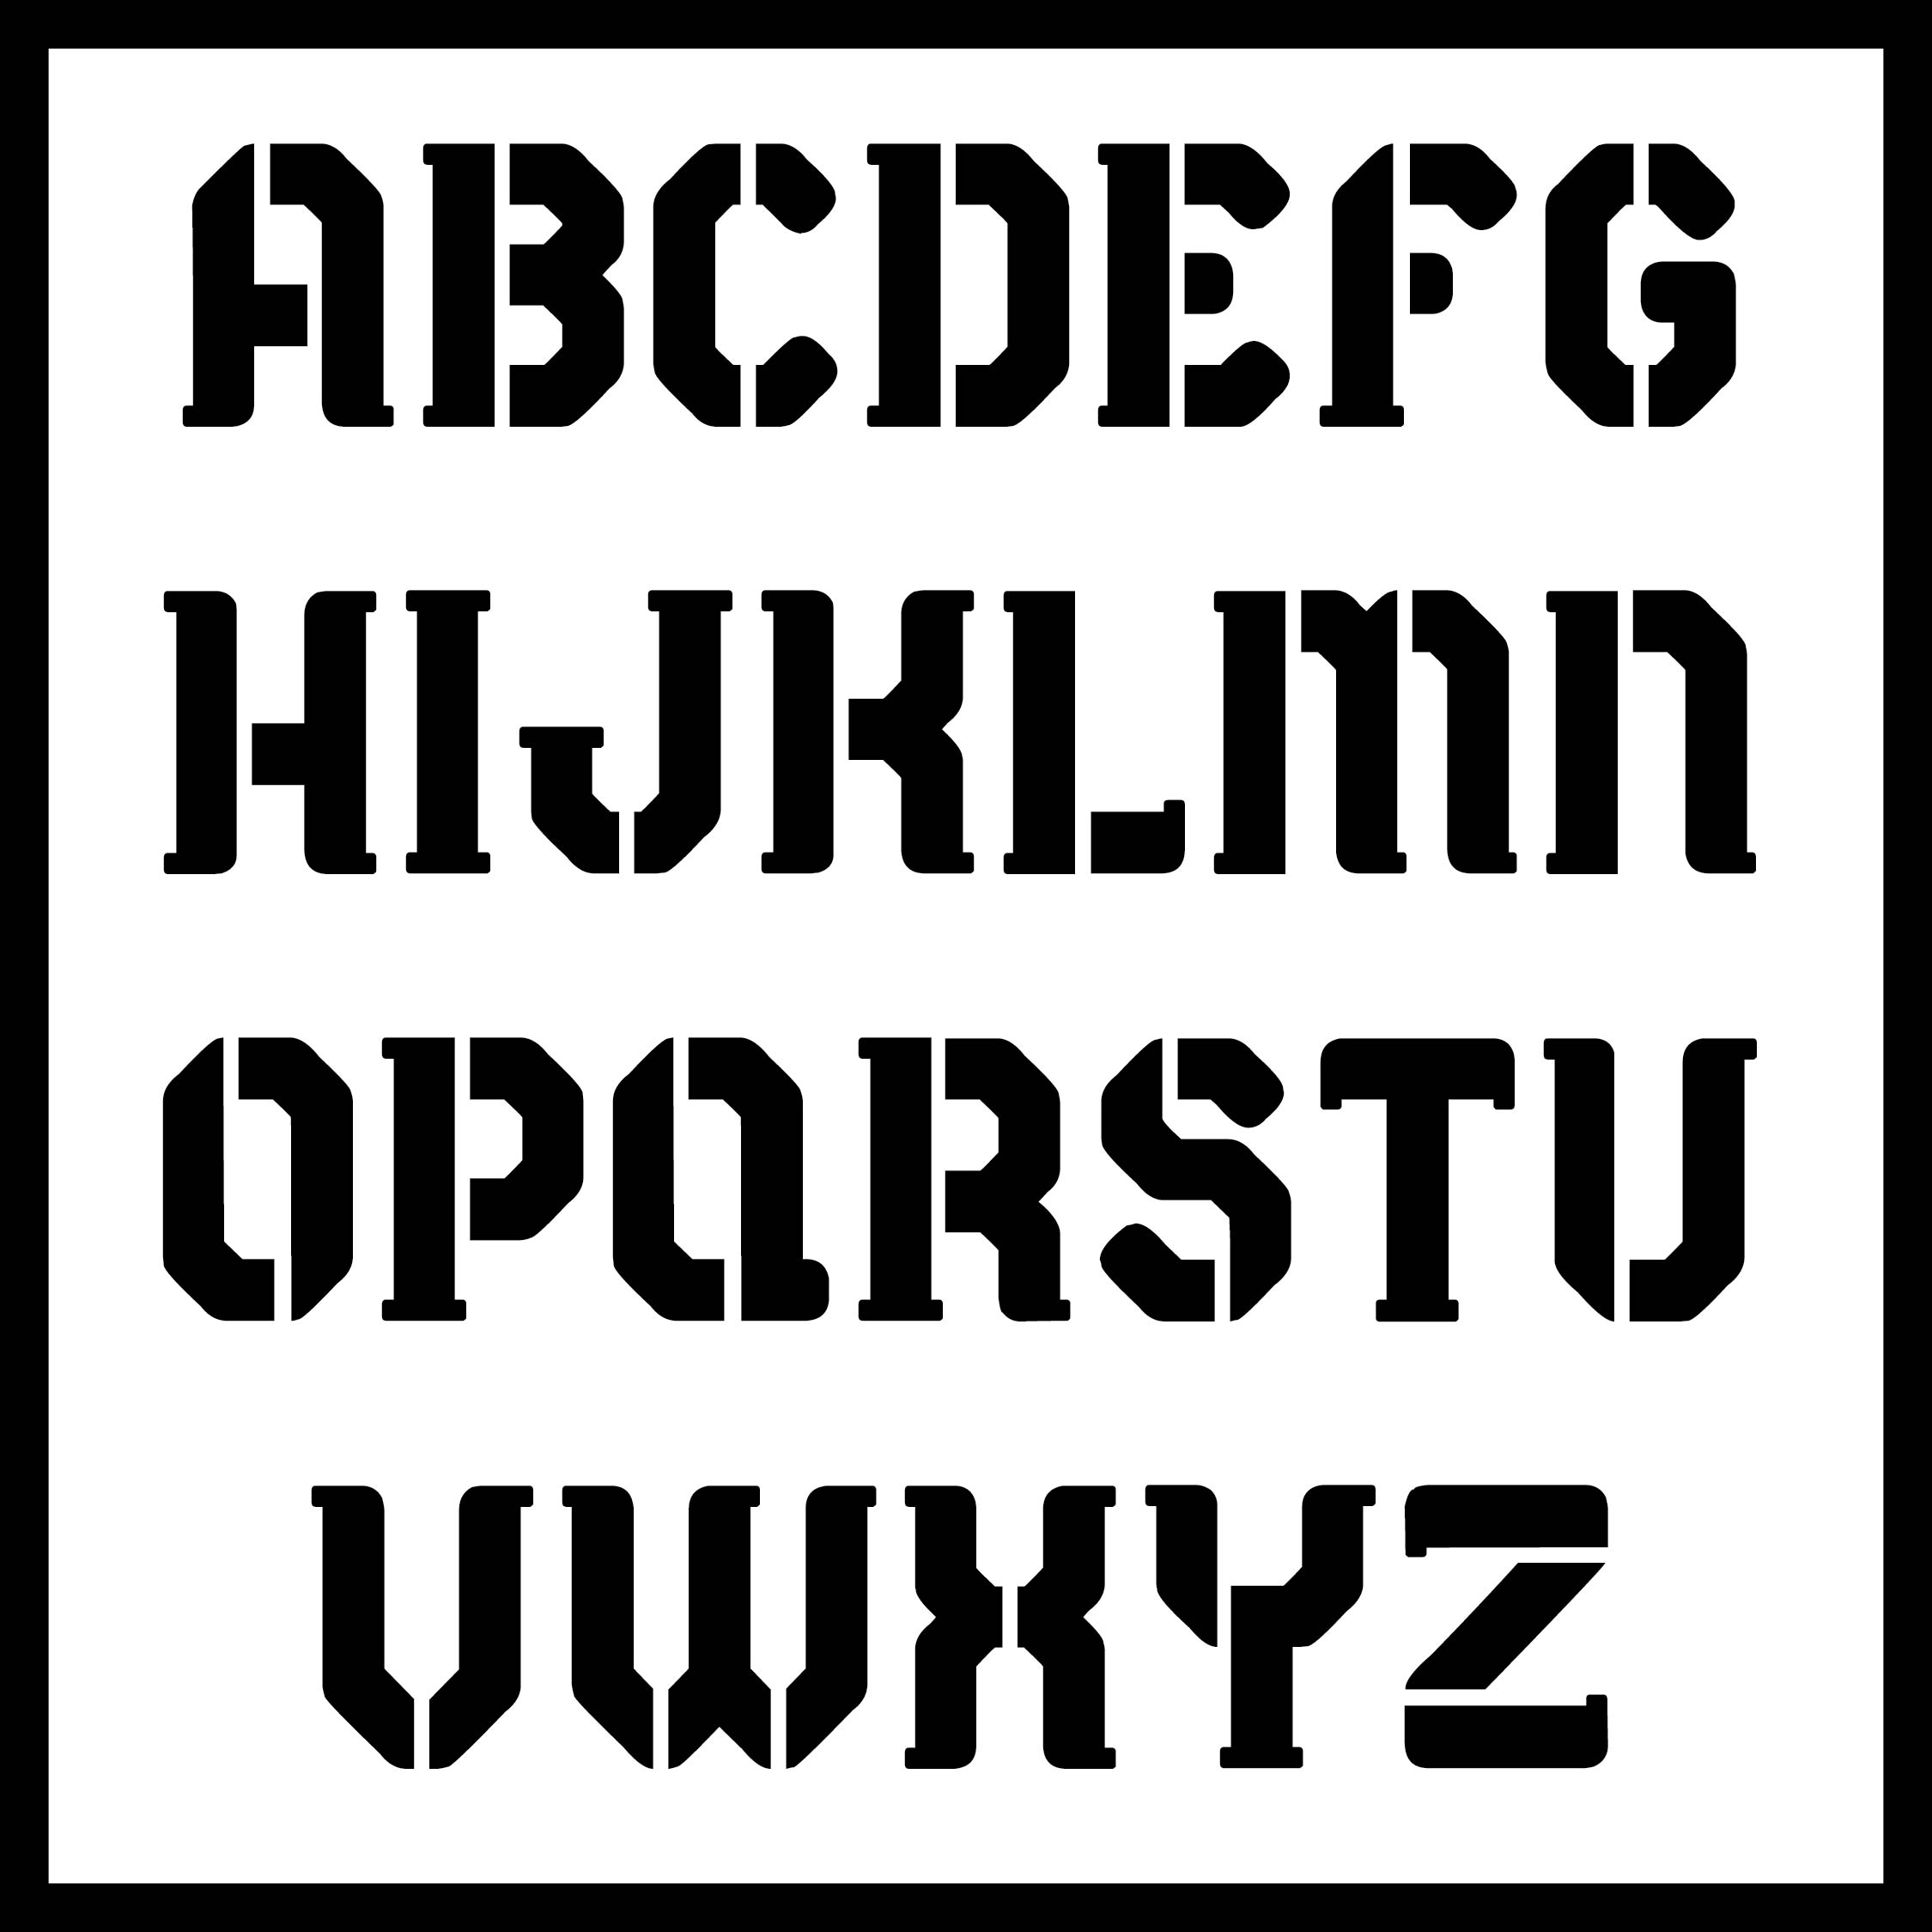 10-best-large-font-printable-letters-printablee